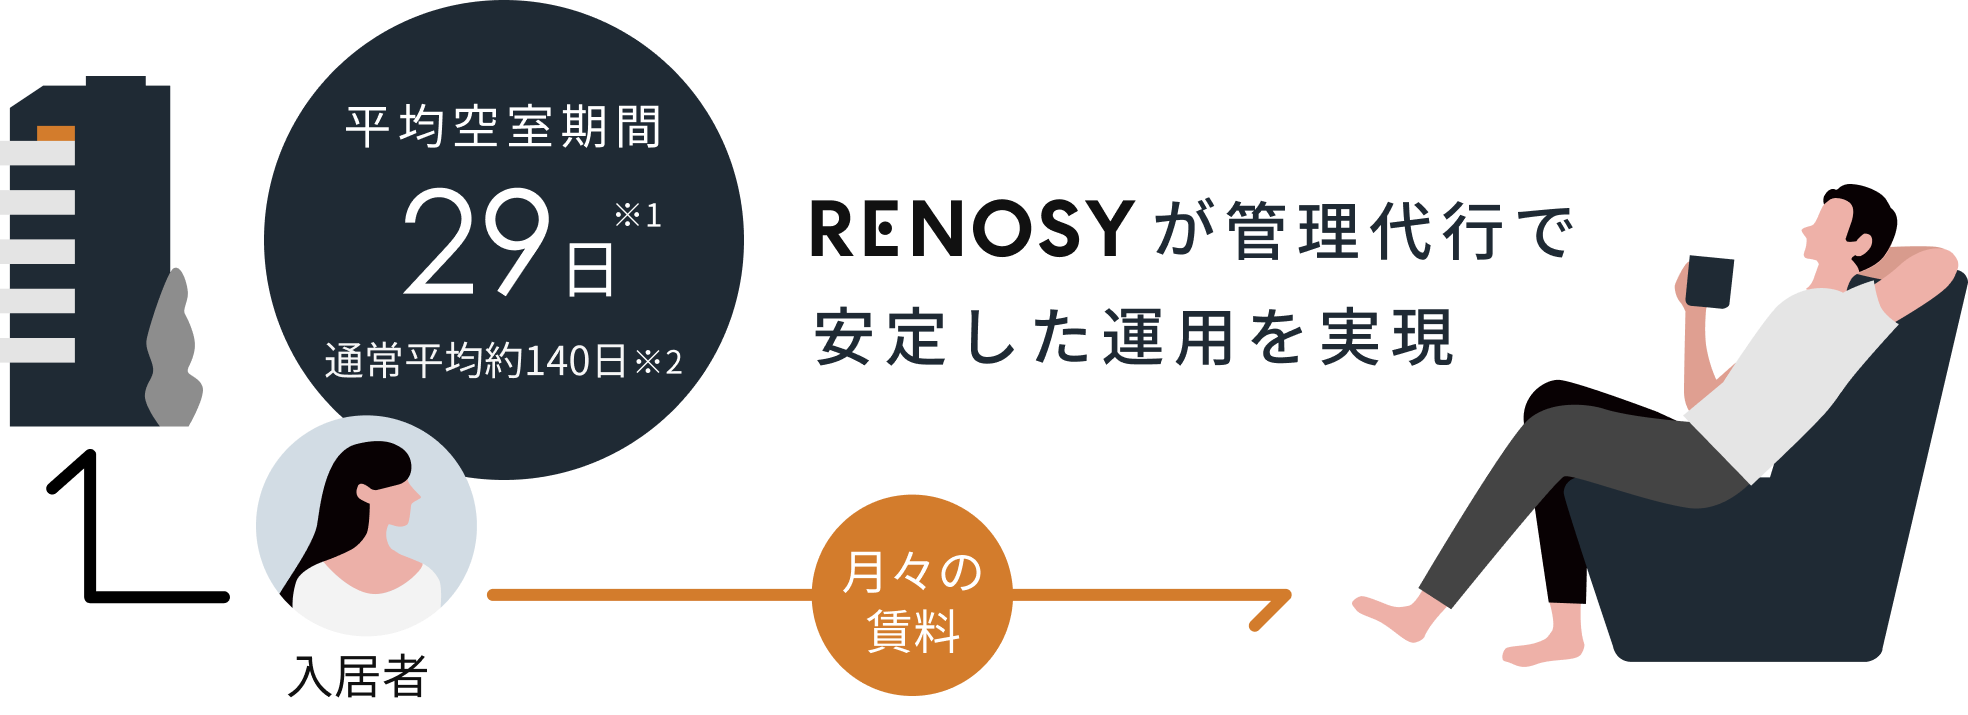 RENOSYが管理代行で安定した運用を実現